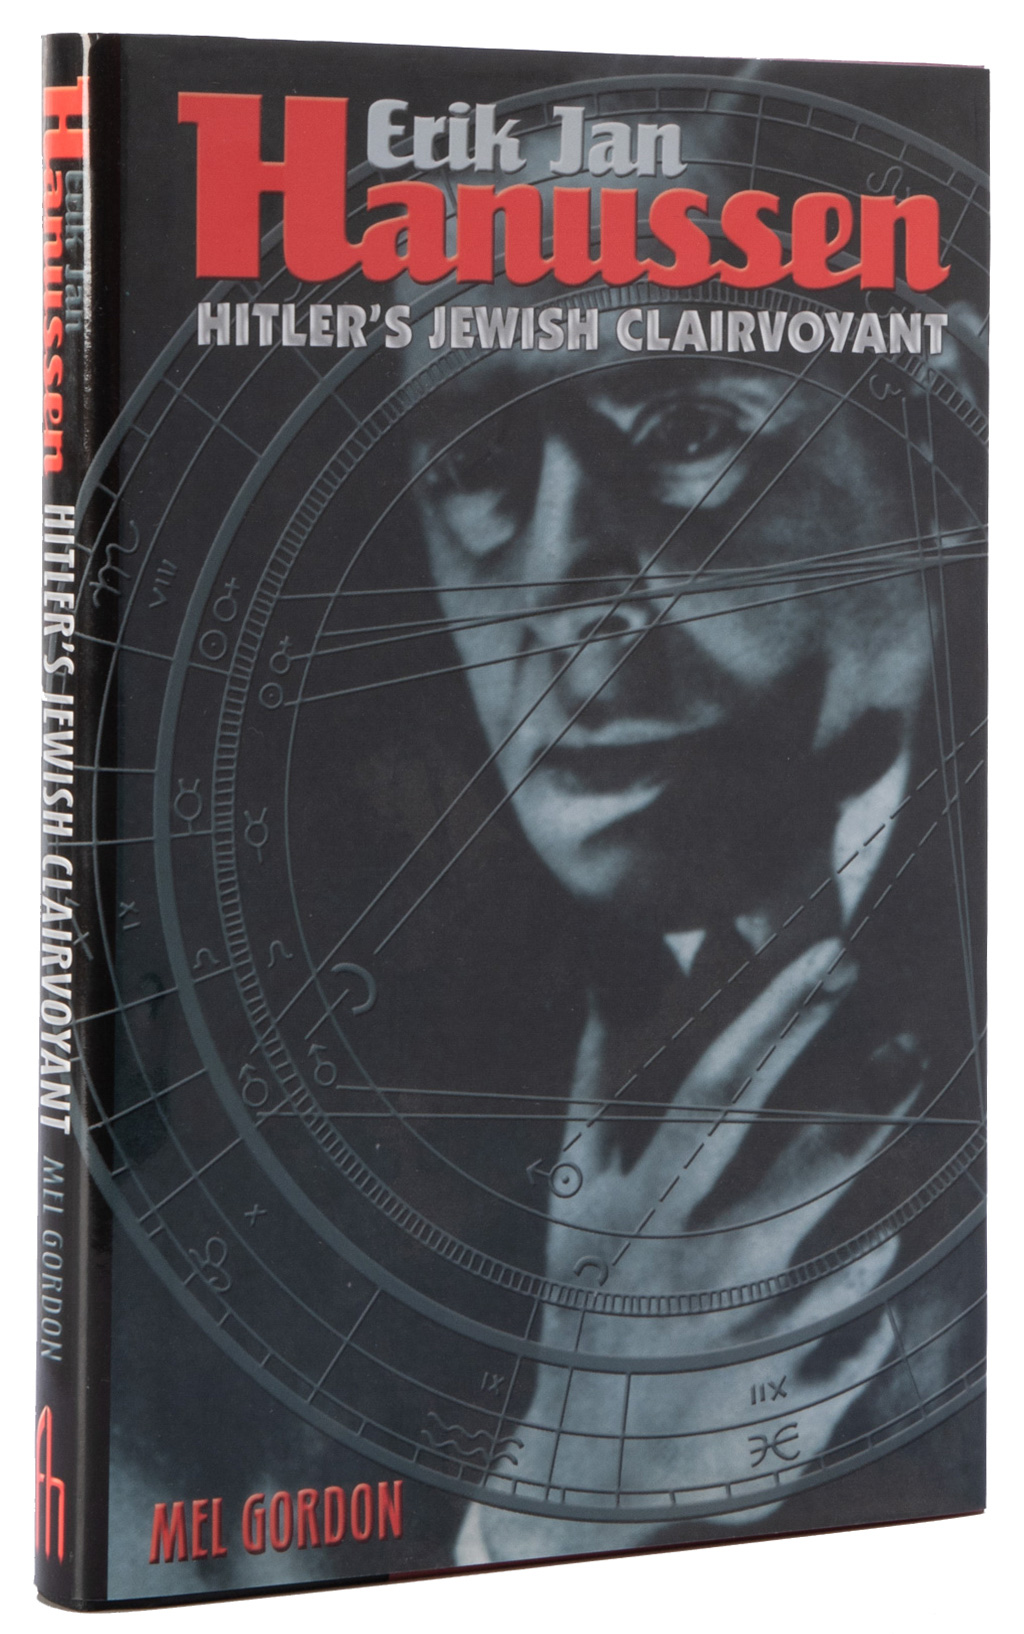 Erik Jan Hanussen: Hitler's Jewish Clairvoyant - Mel Gordon